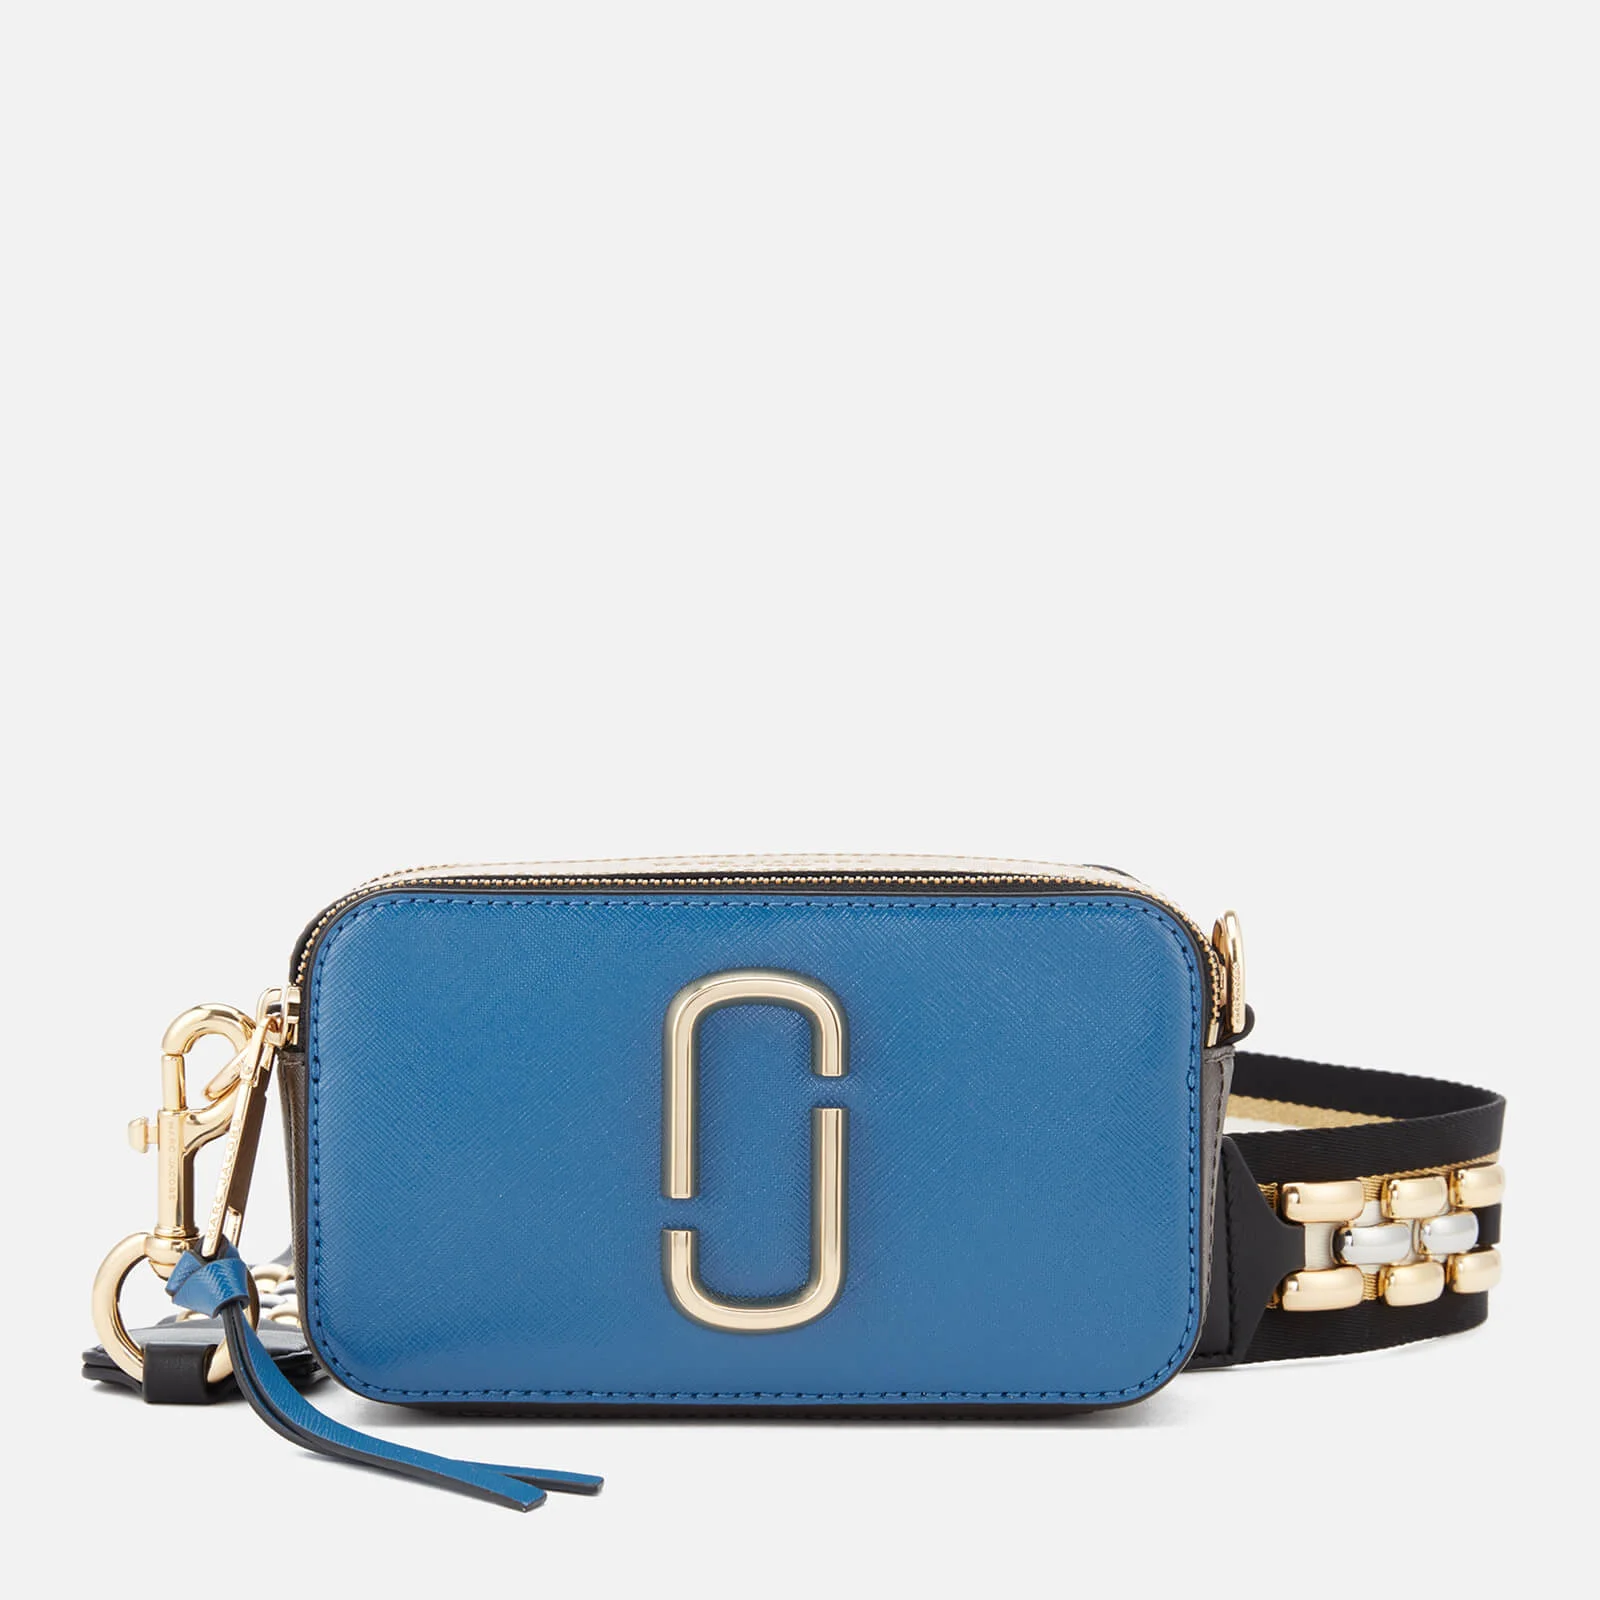 Marc Jacobs Women's Snapshot Cross Body Bag - Vintage Blue/Multi Image 1